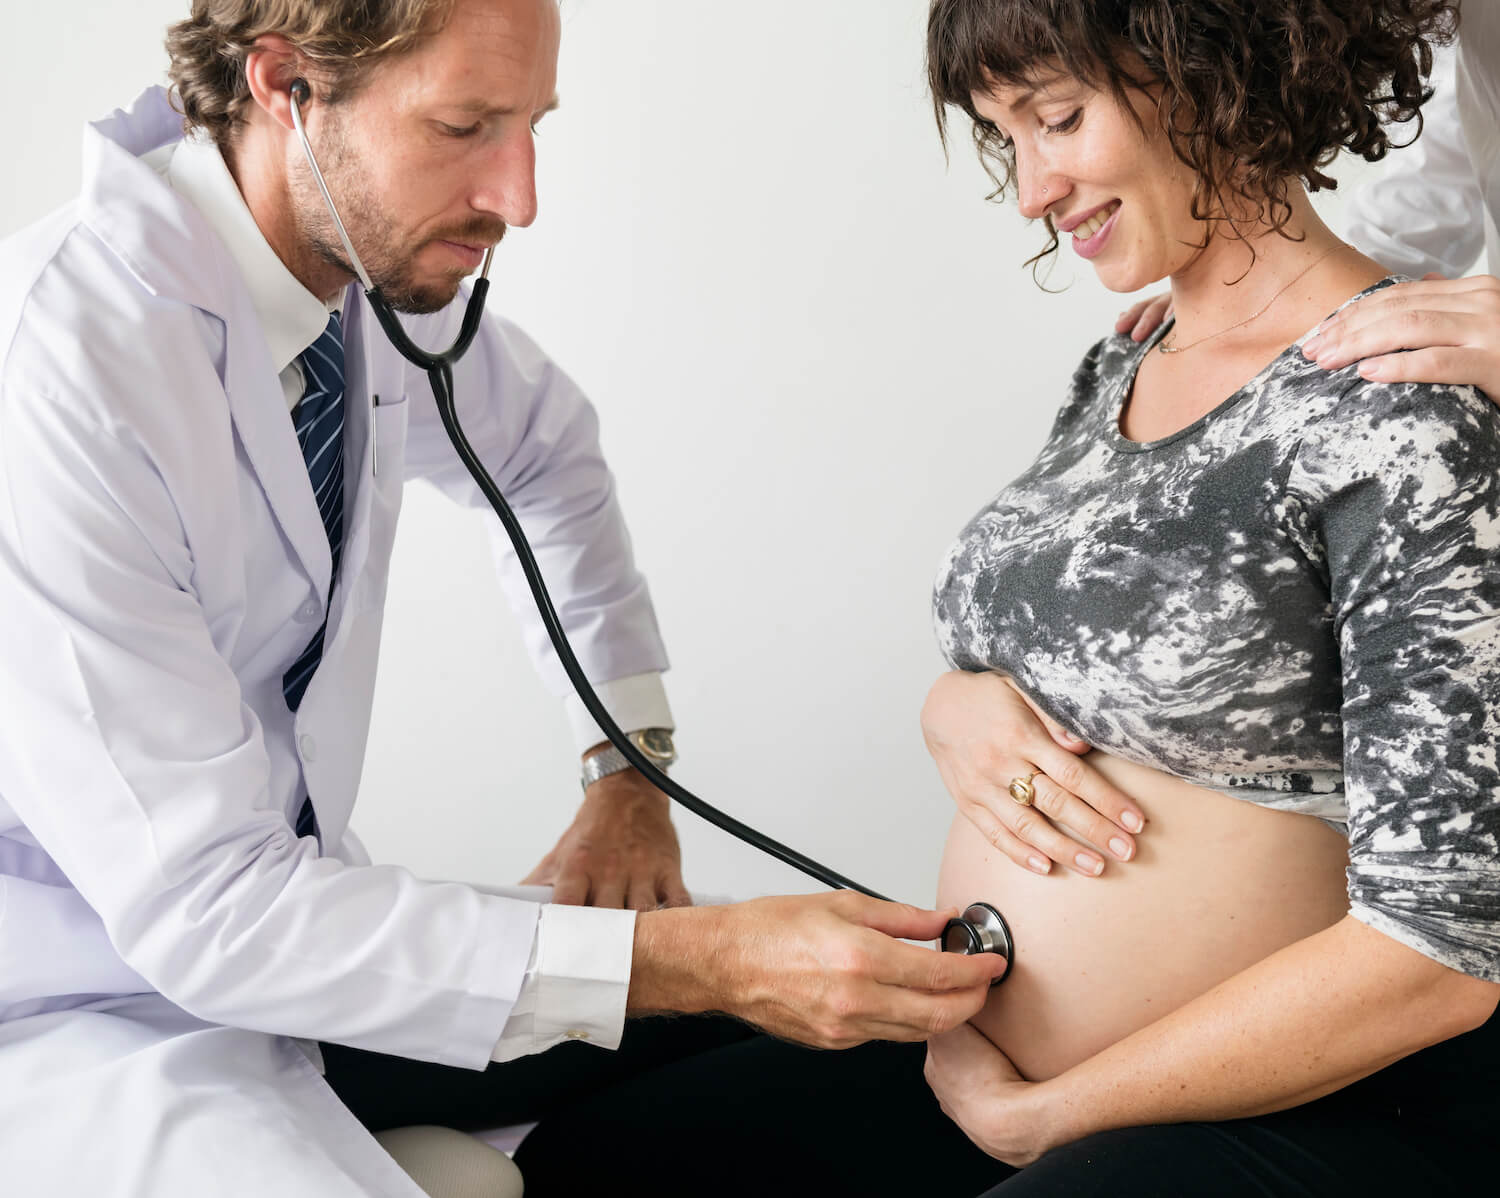 internal exam first prenatal visit